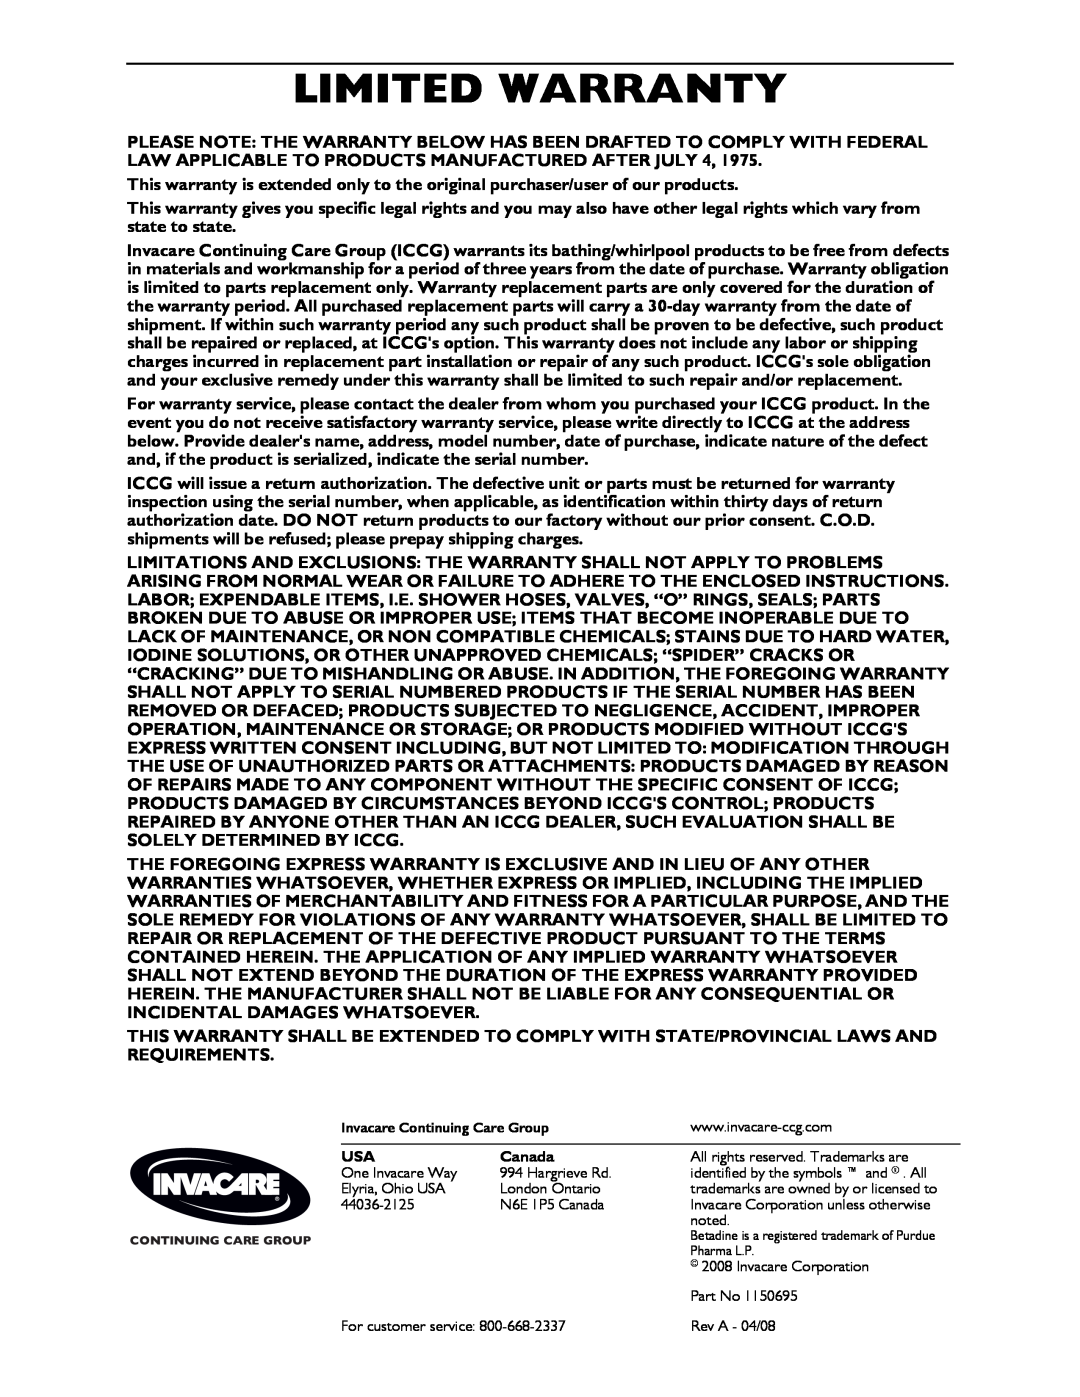 Invacare 3800, 3750 manual Limited Warranty, Canada 